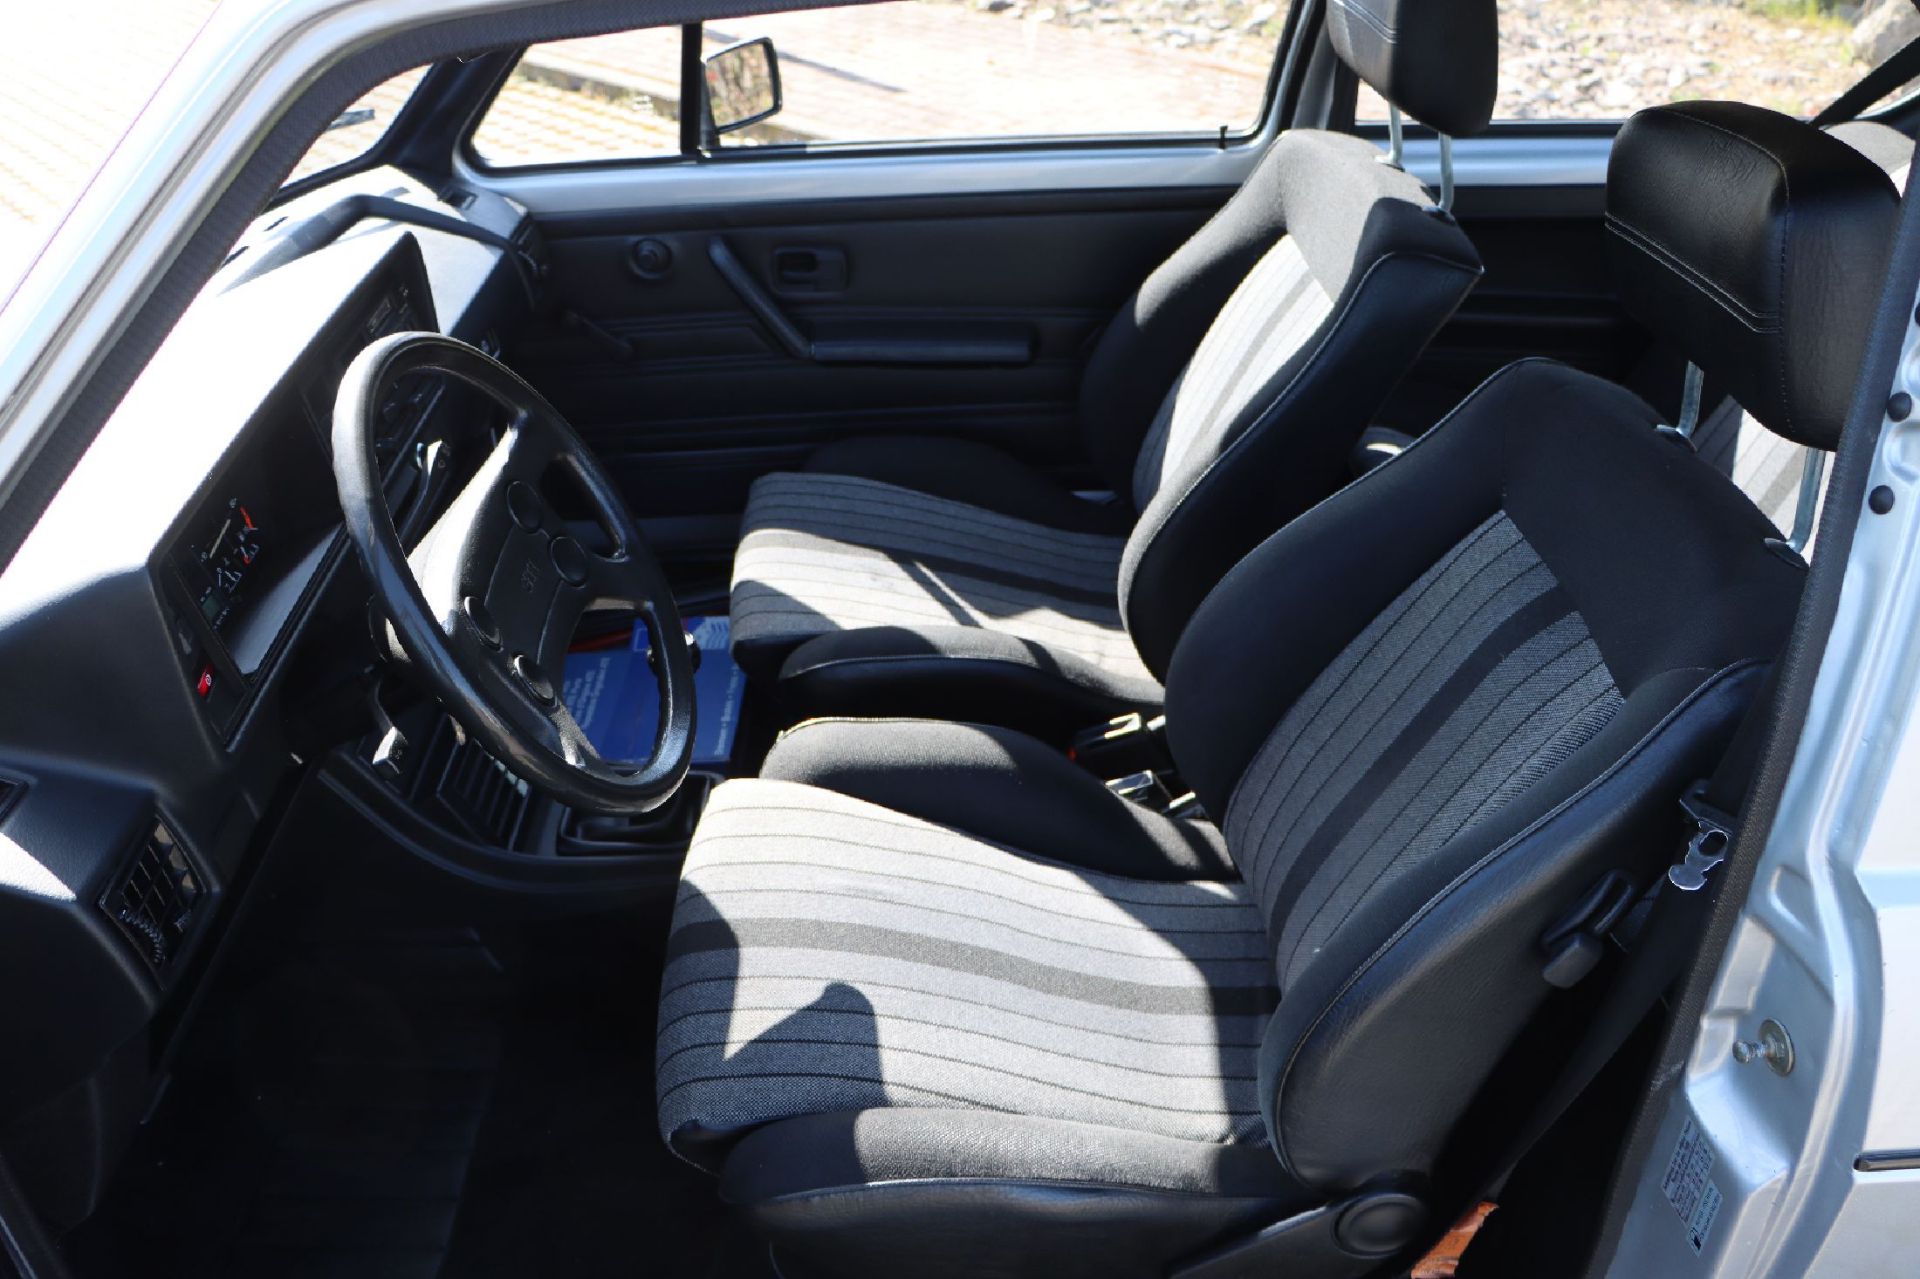 VW 1er Golf GTI, Fahrgestellnummer: WVWZZZ17ZDW654014, EZ - Image 5 of 7